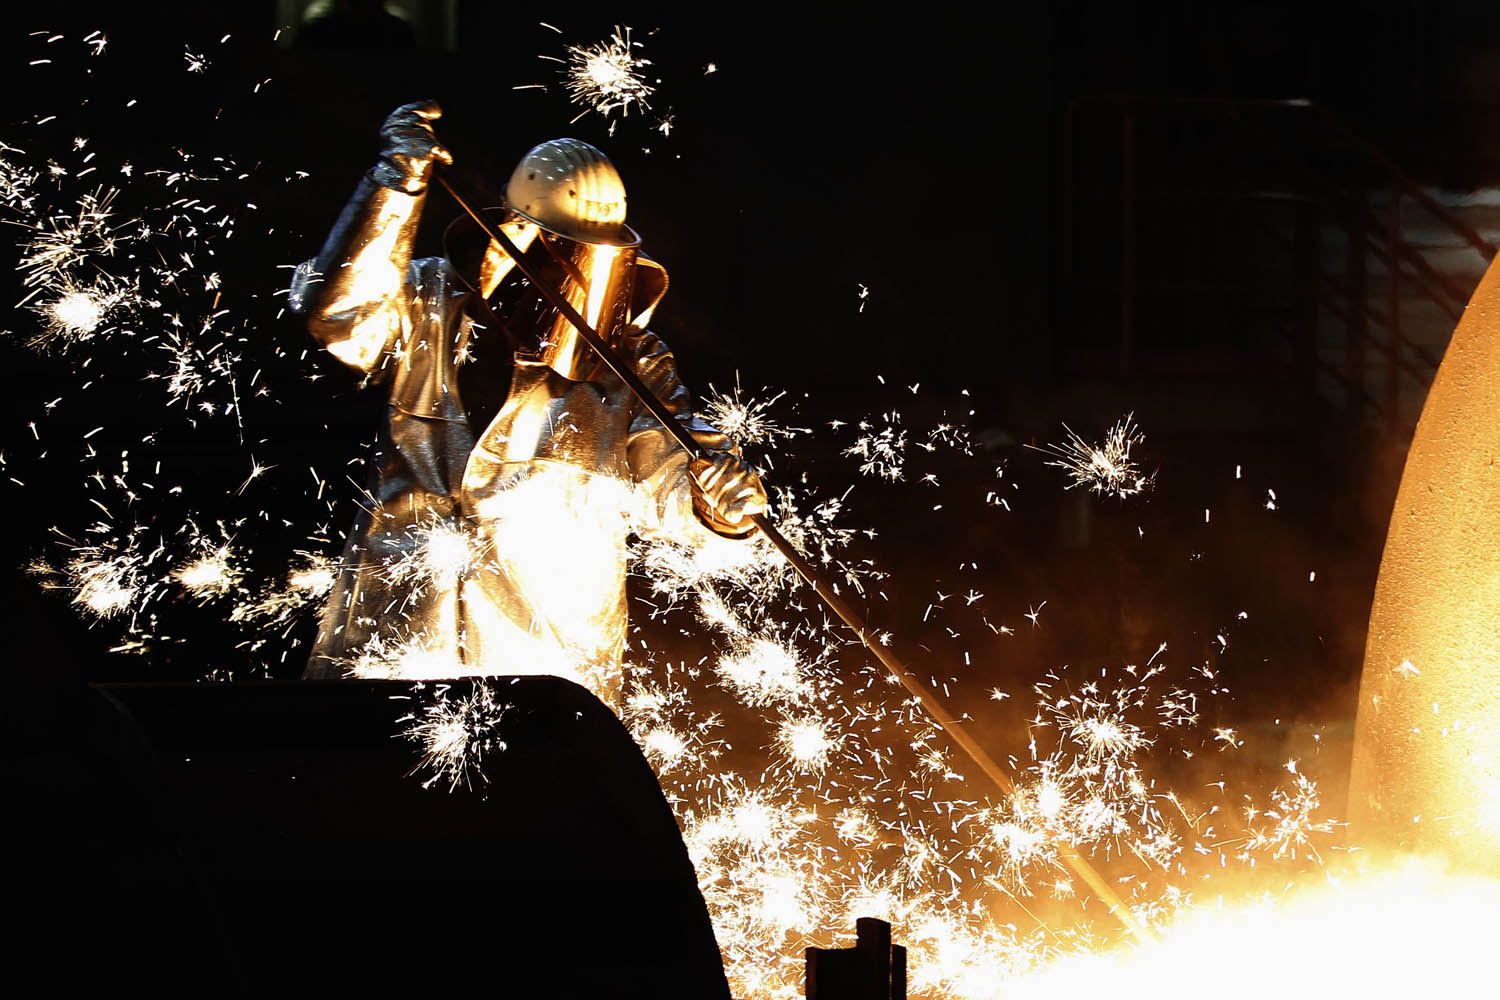 File photo of worker of German steelmaker ThyssenKrupp controlling a blast furnace in Duisburg